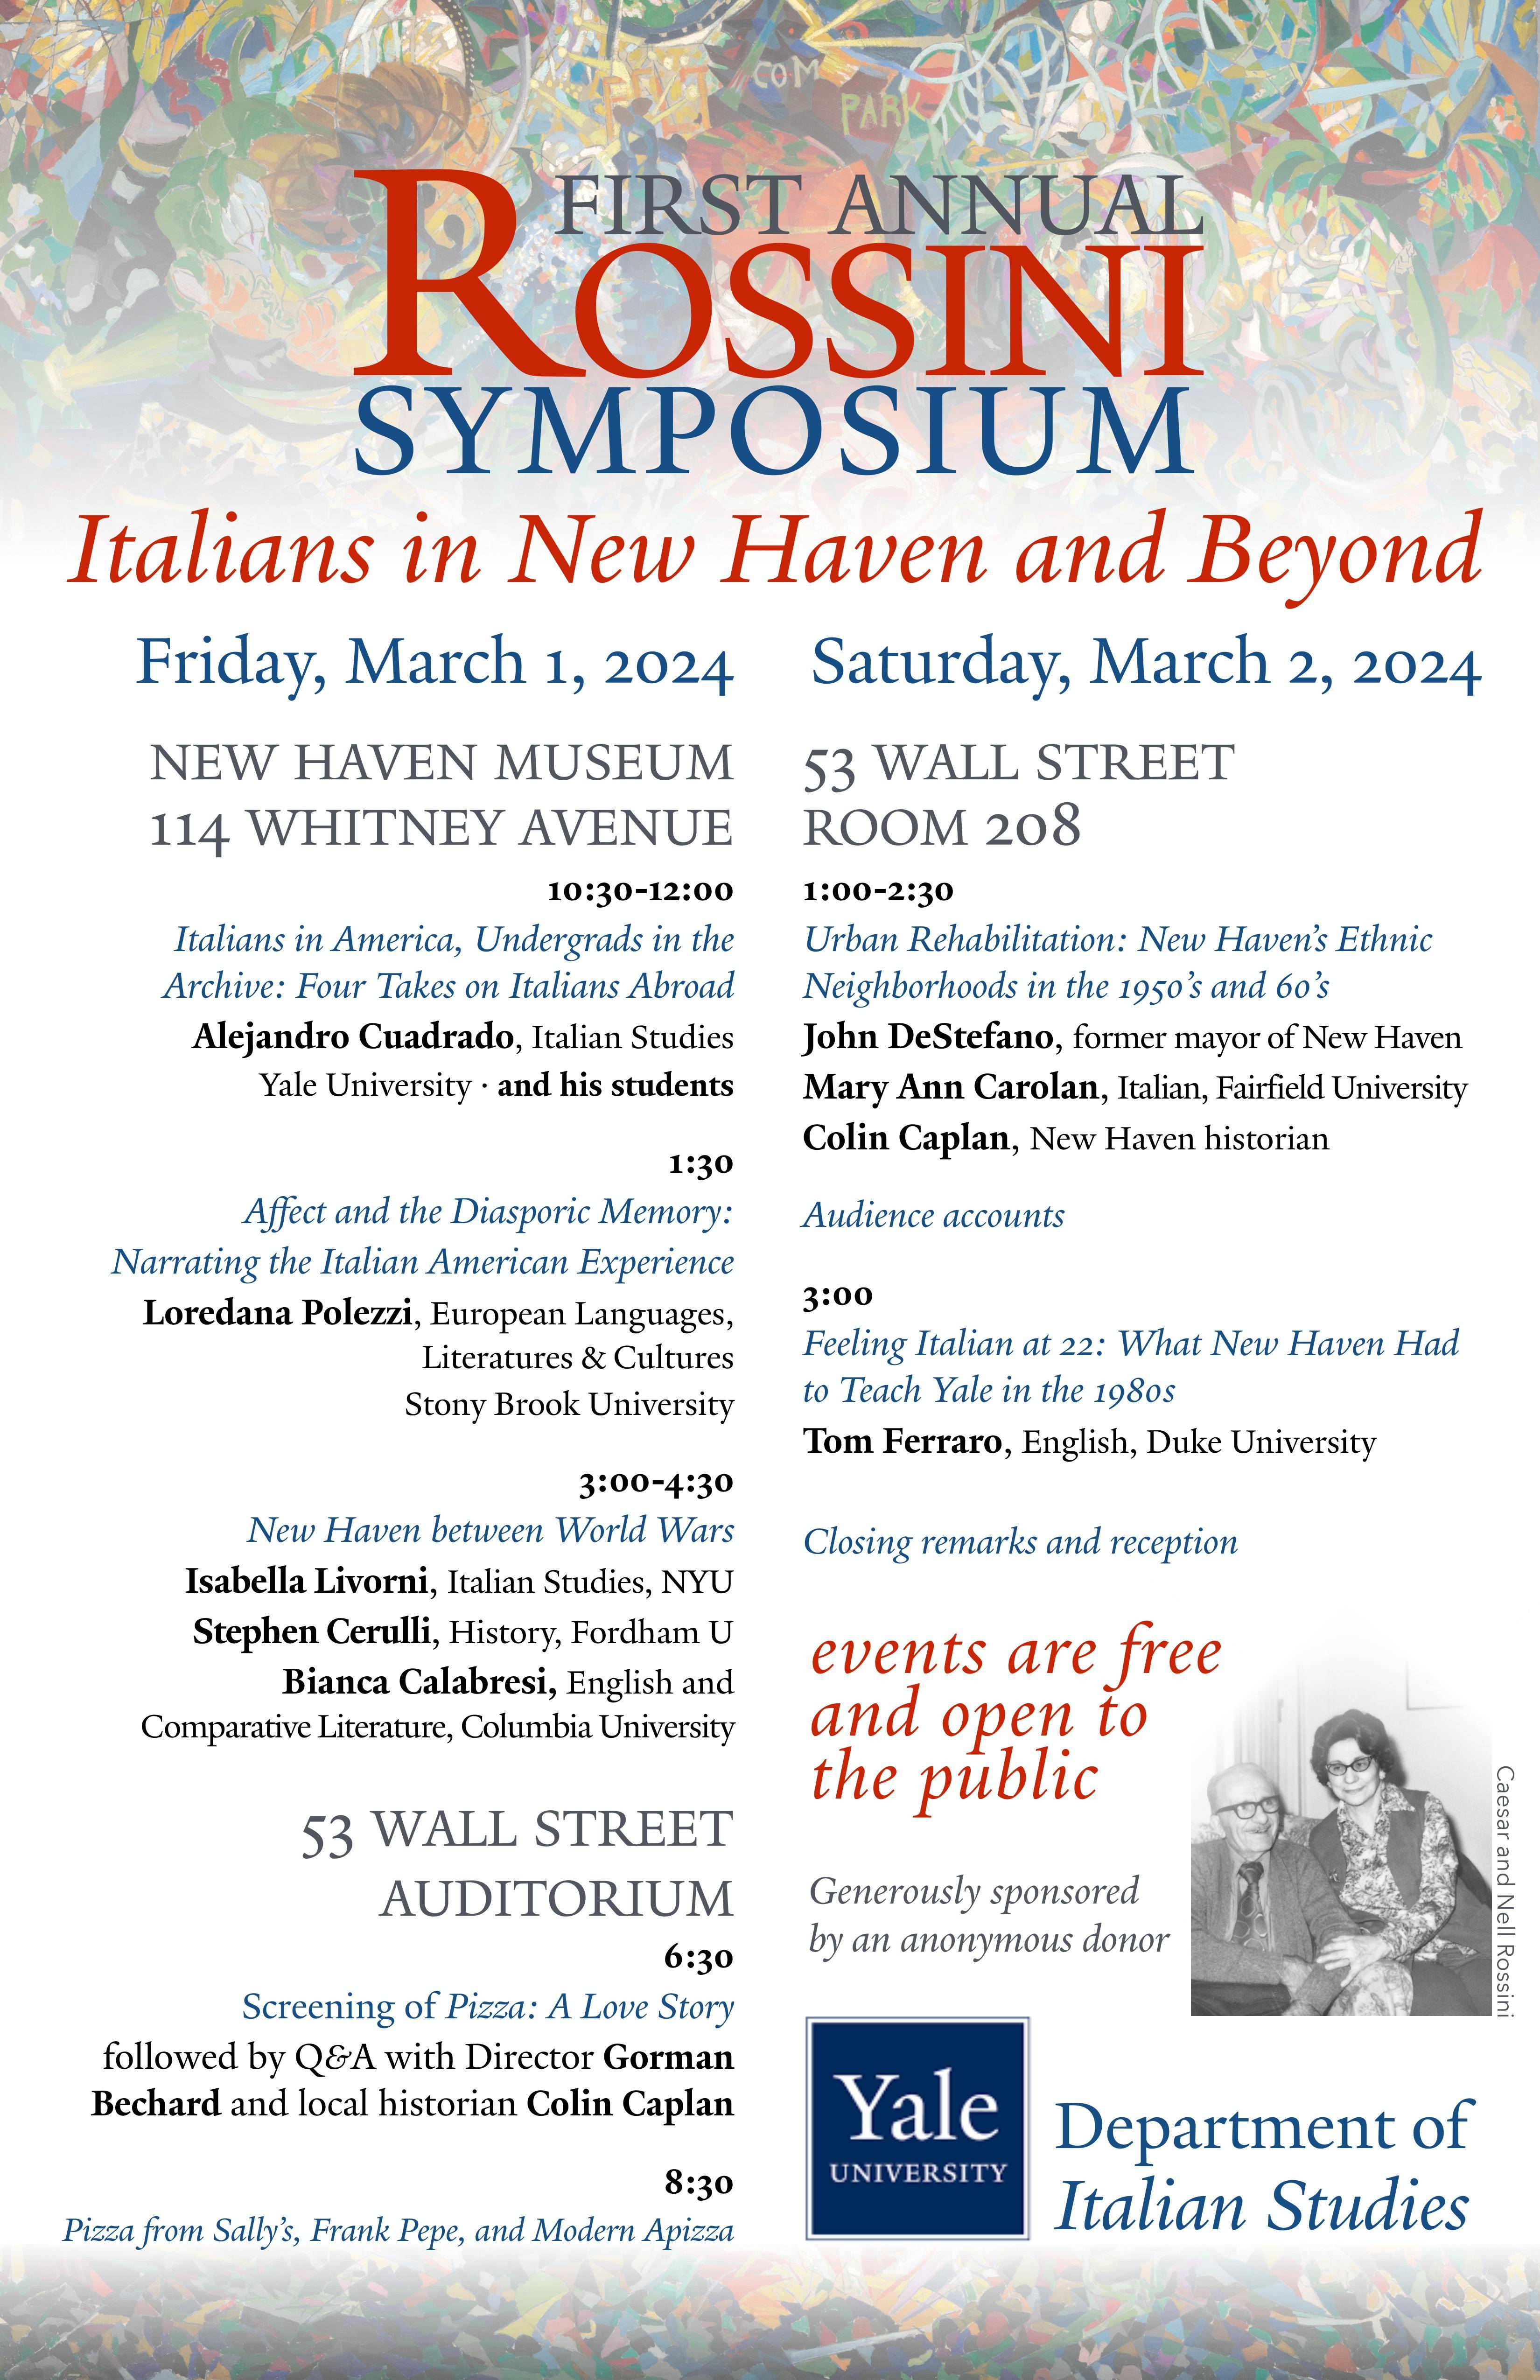 Rossini Symposium Poster with program details